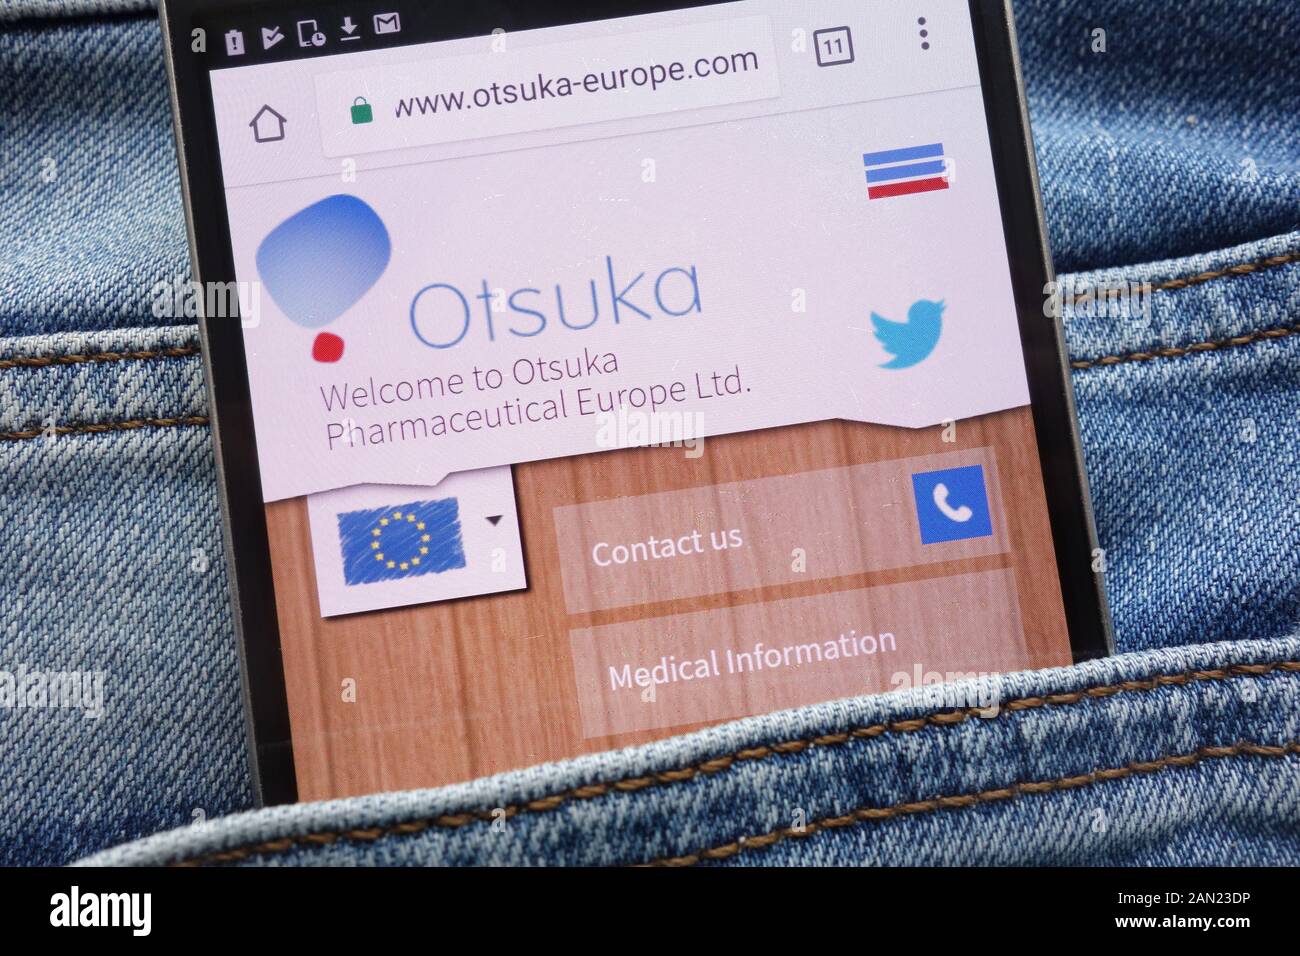 Otsuka Pharmaceutical Europe website displayed on smartphone hidden in jeans pocket Stock Photo